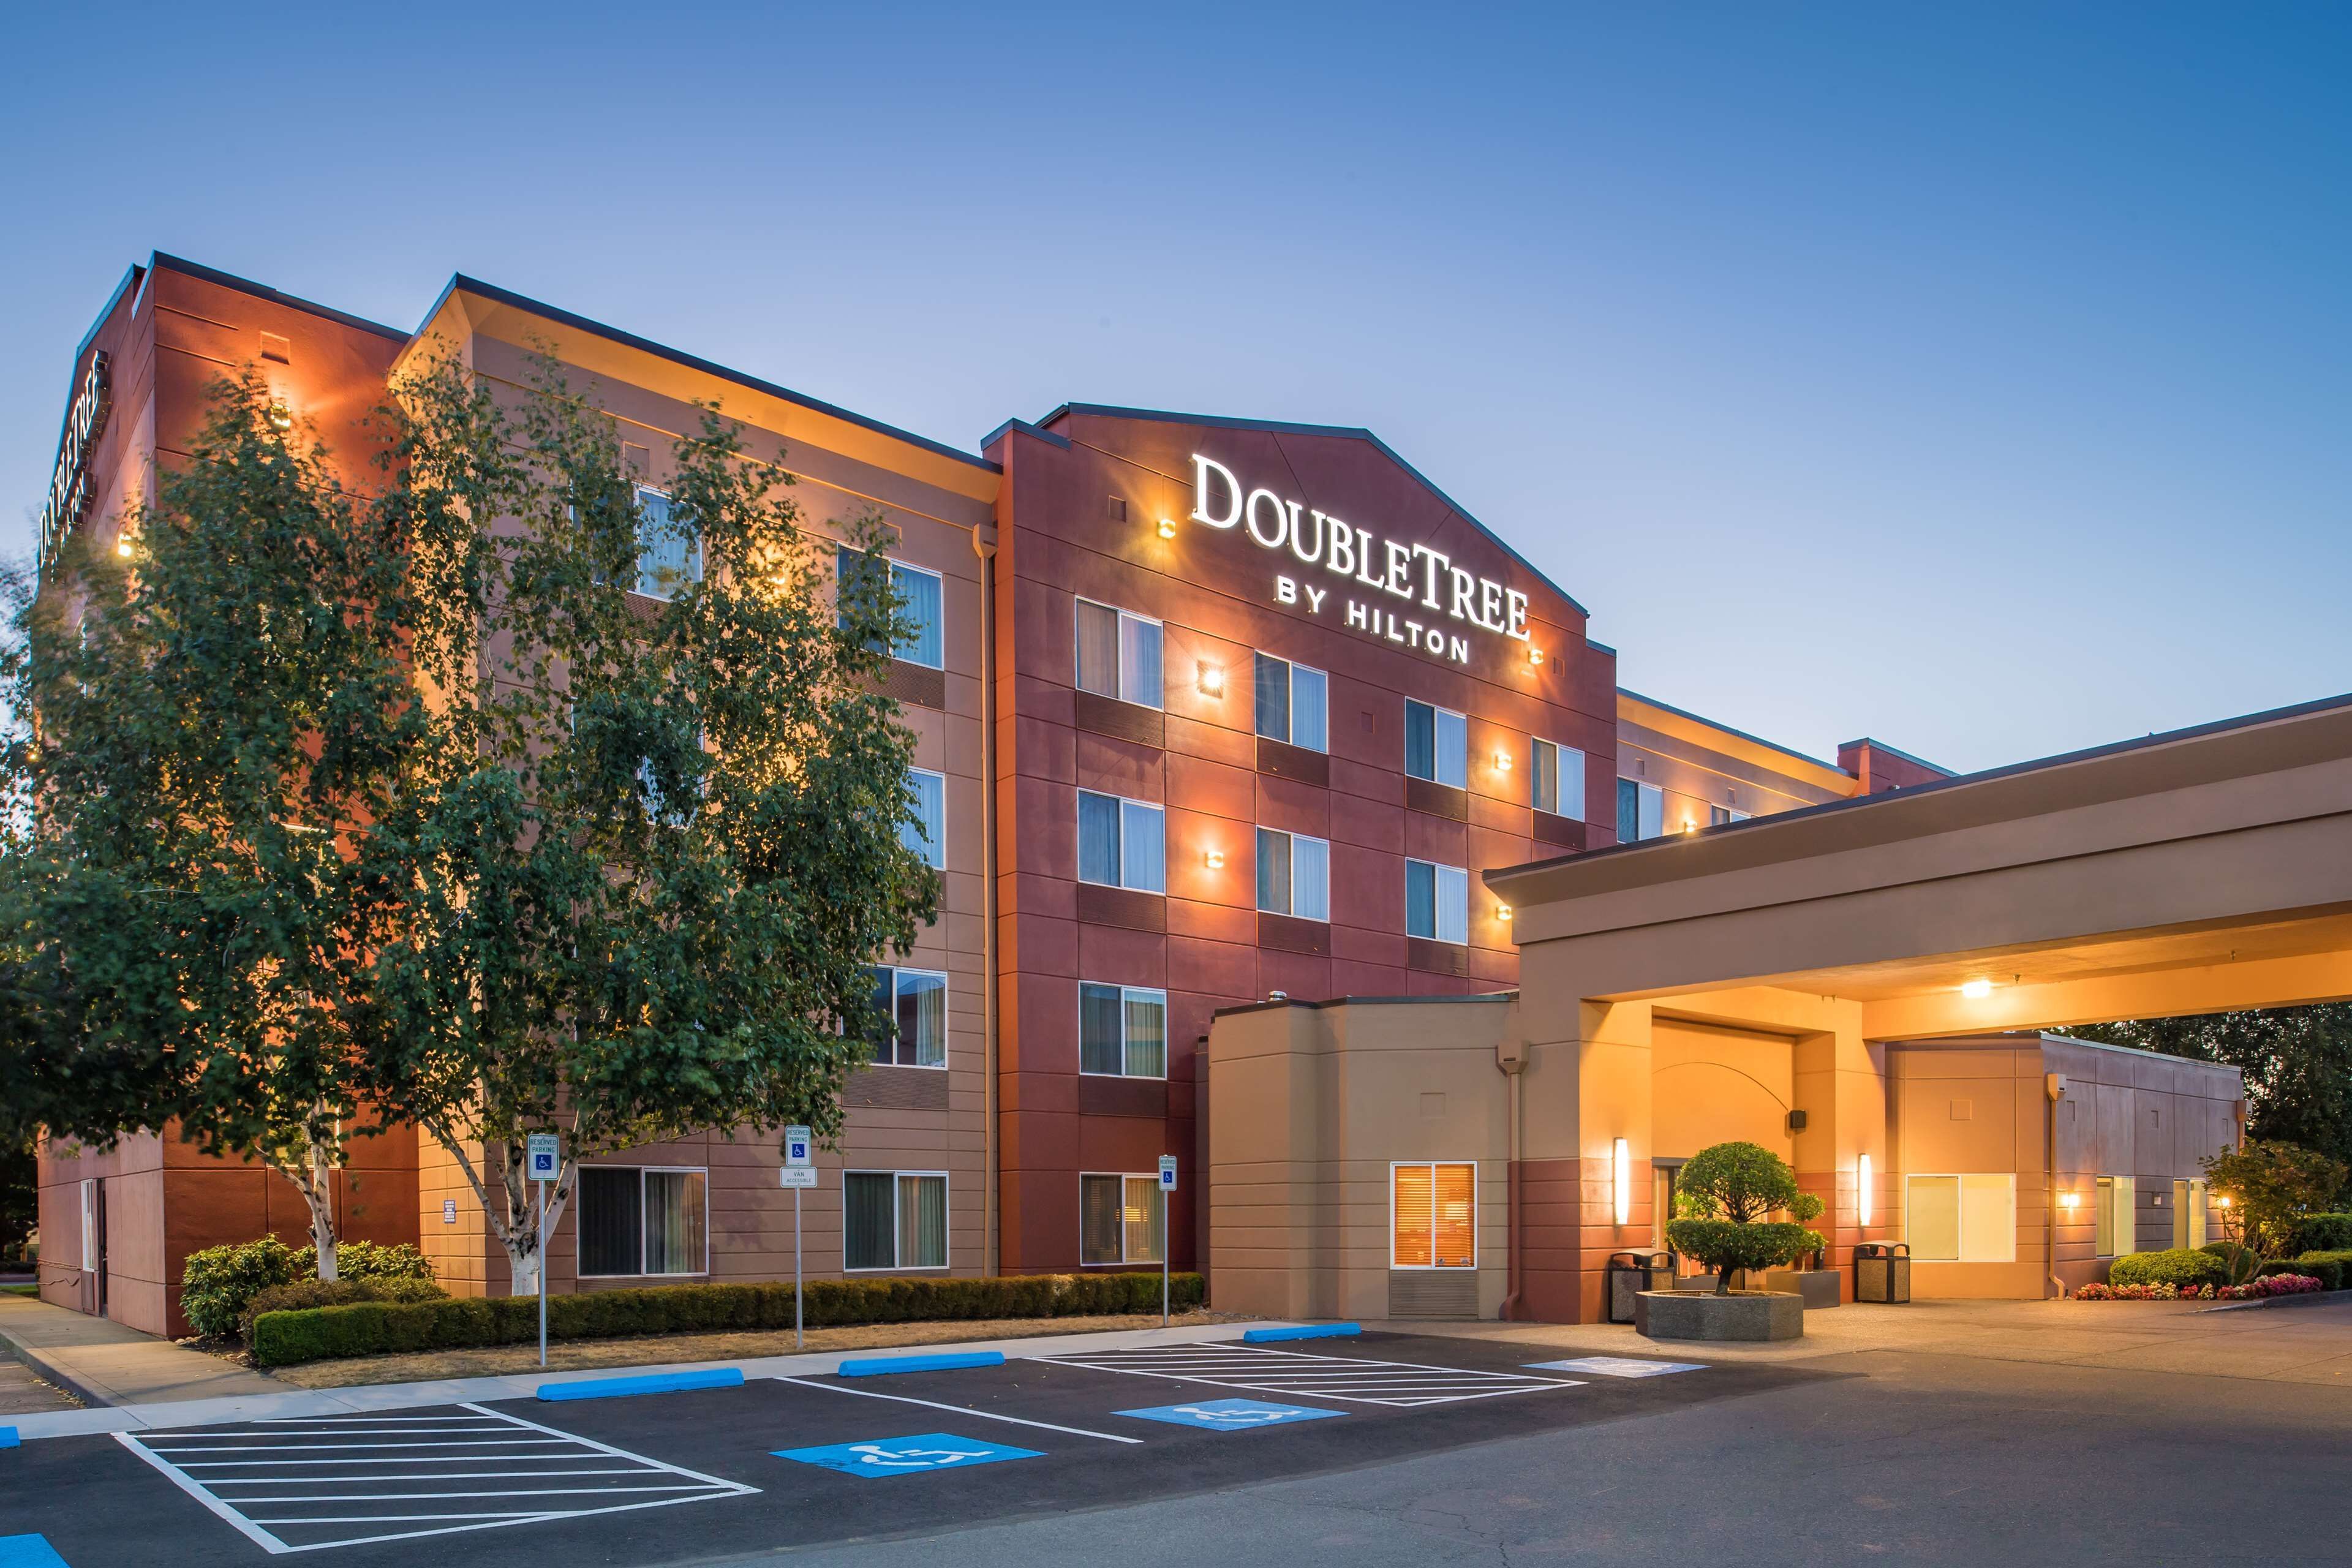 Building view of DoubleTree by Hilton Hotel Salem, Oregon